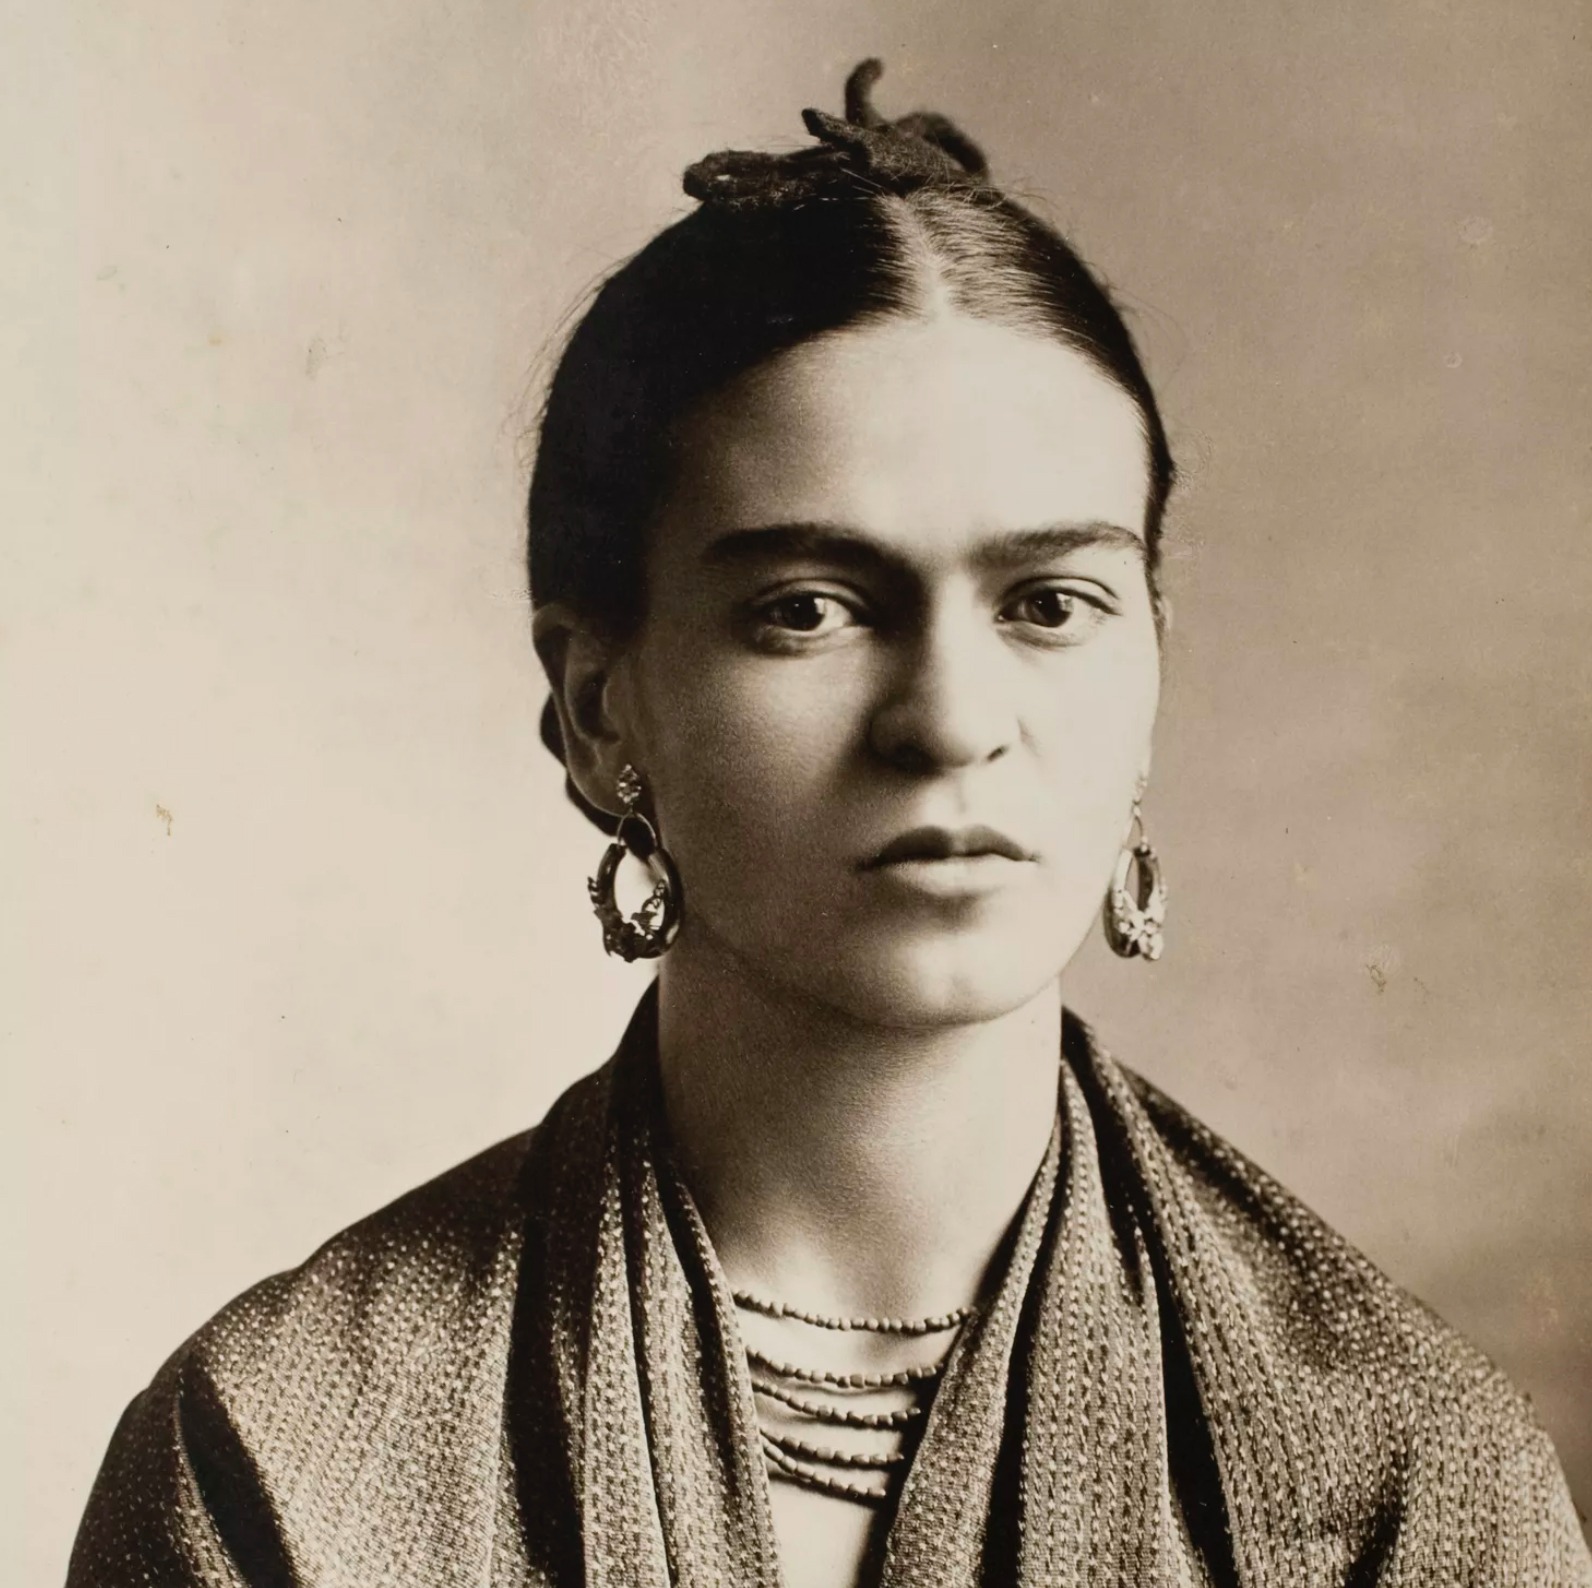 El acervo fotográfico de Frida Kahlo